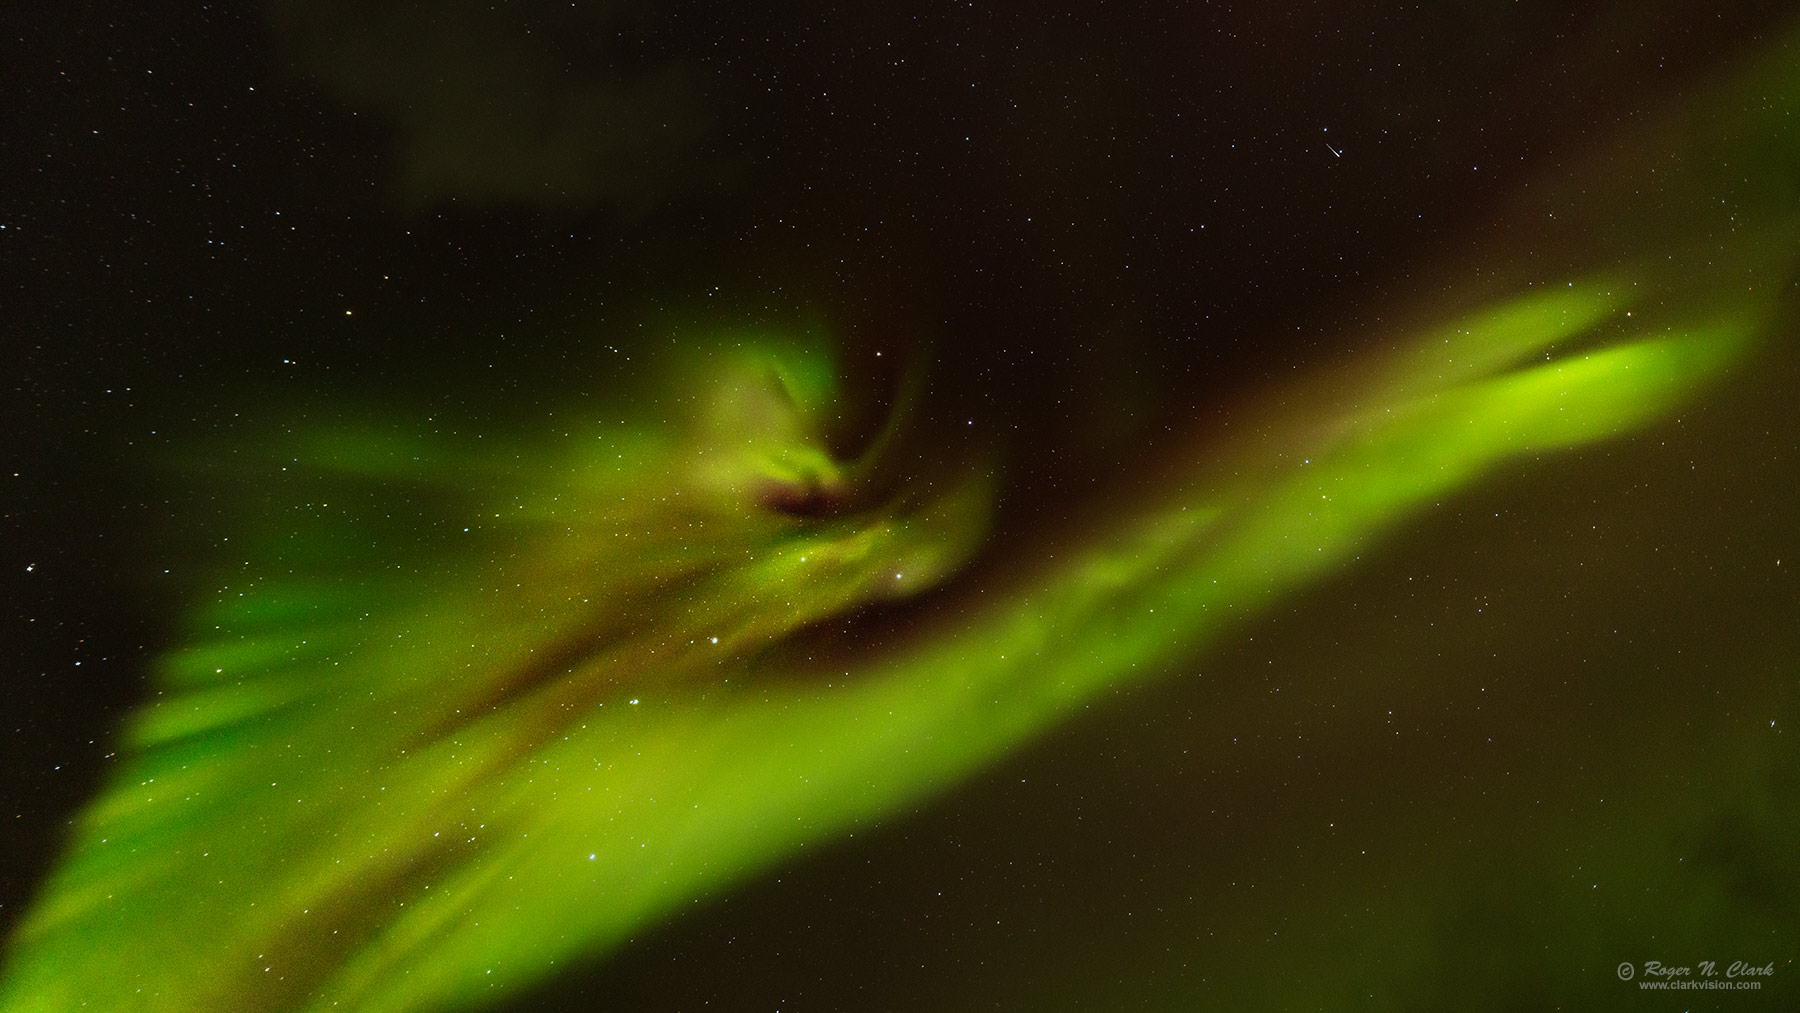 image aurora-c03.23-24.2022-alaska-rnclark-4C3A5429.c-1800s.jpg is Copyrighted by Roger N. Clark, www.clarkvision.com